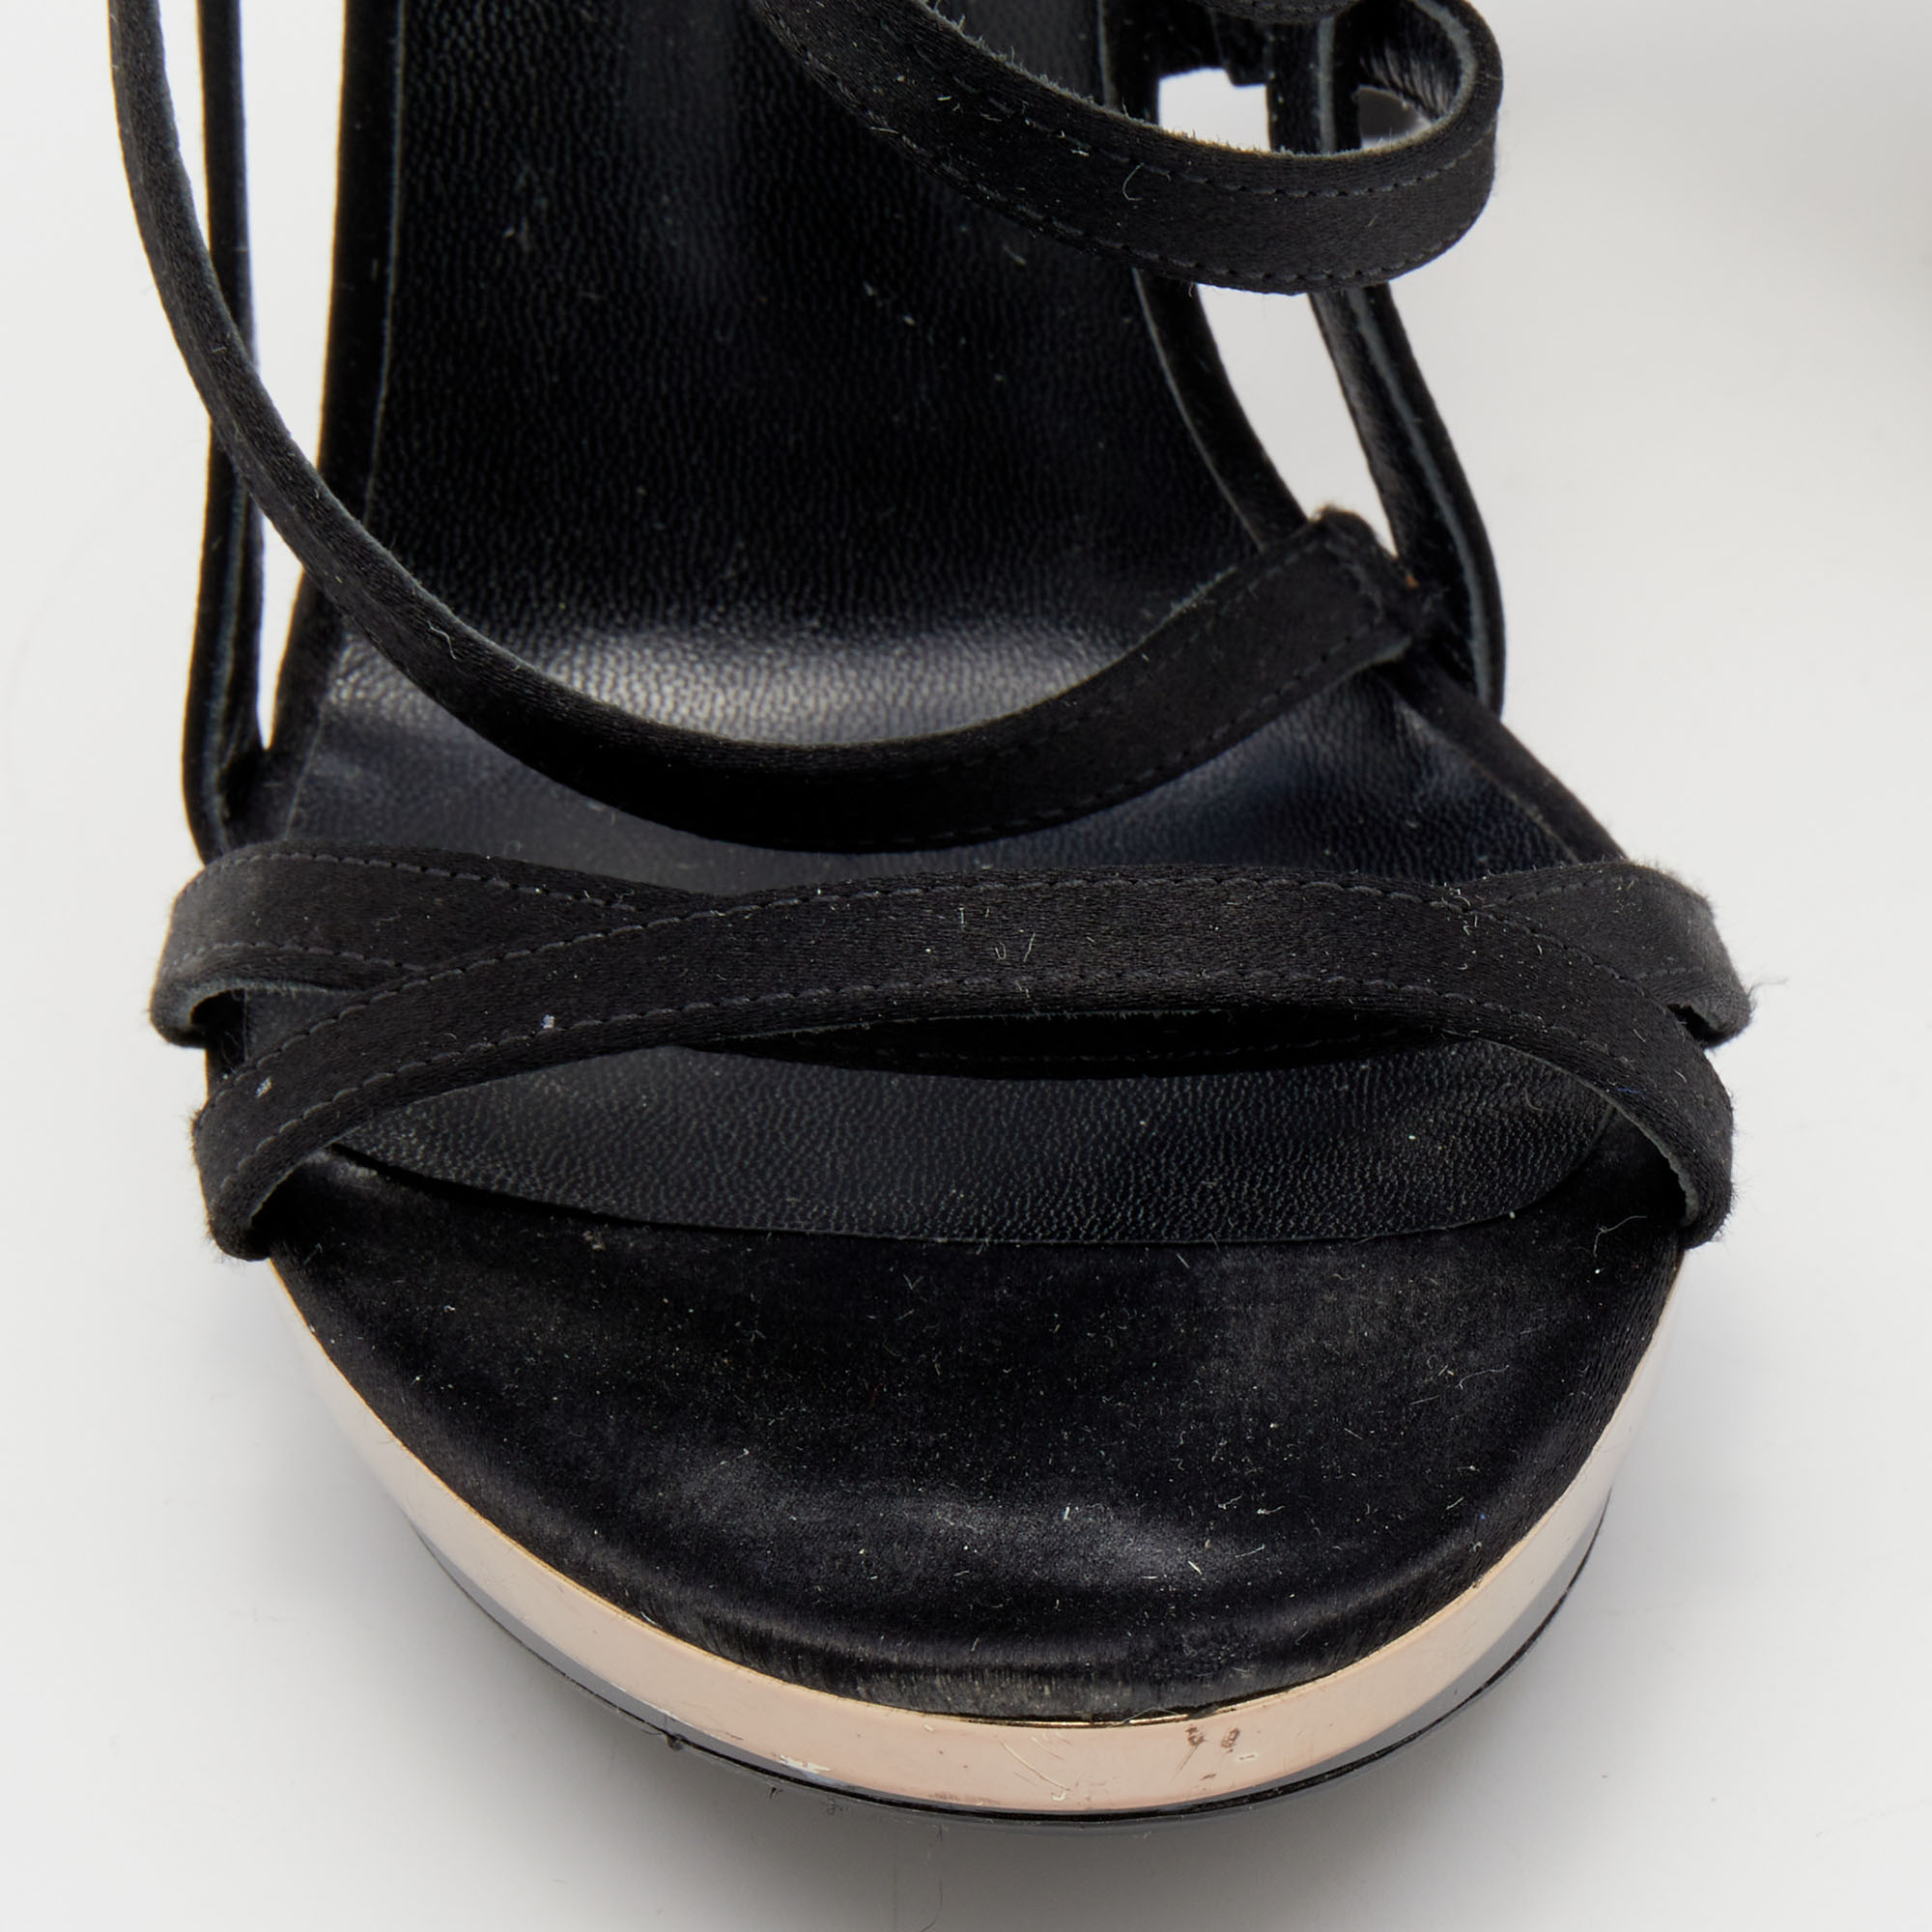 Versace Black Satin Strappy Sandals Size 37